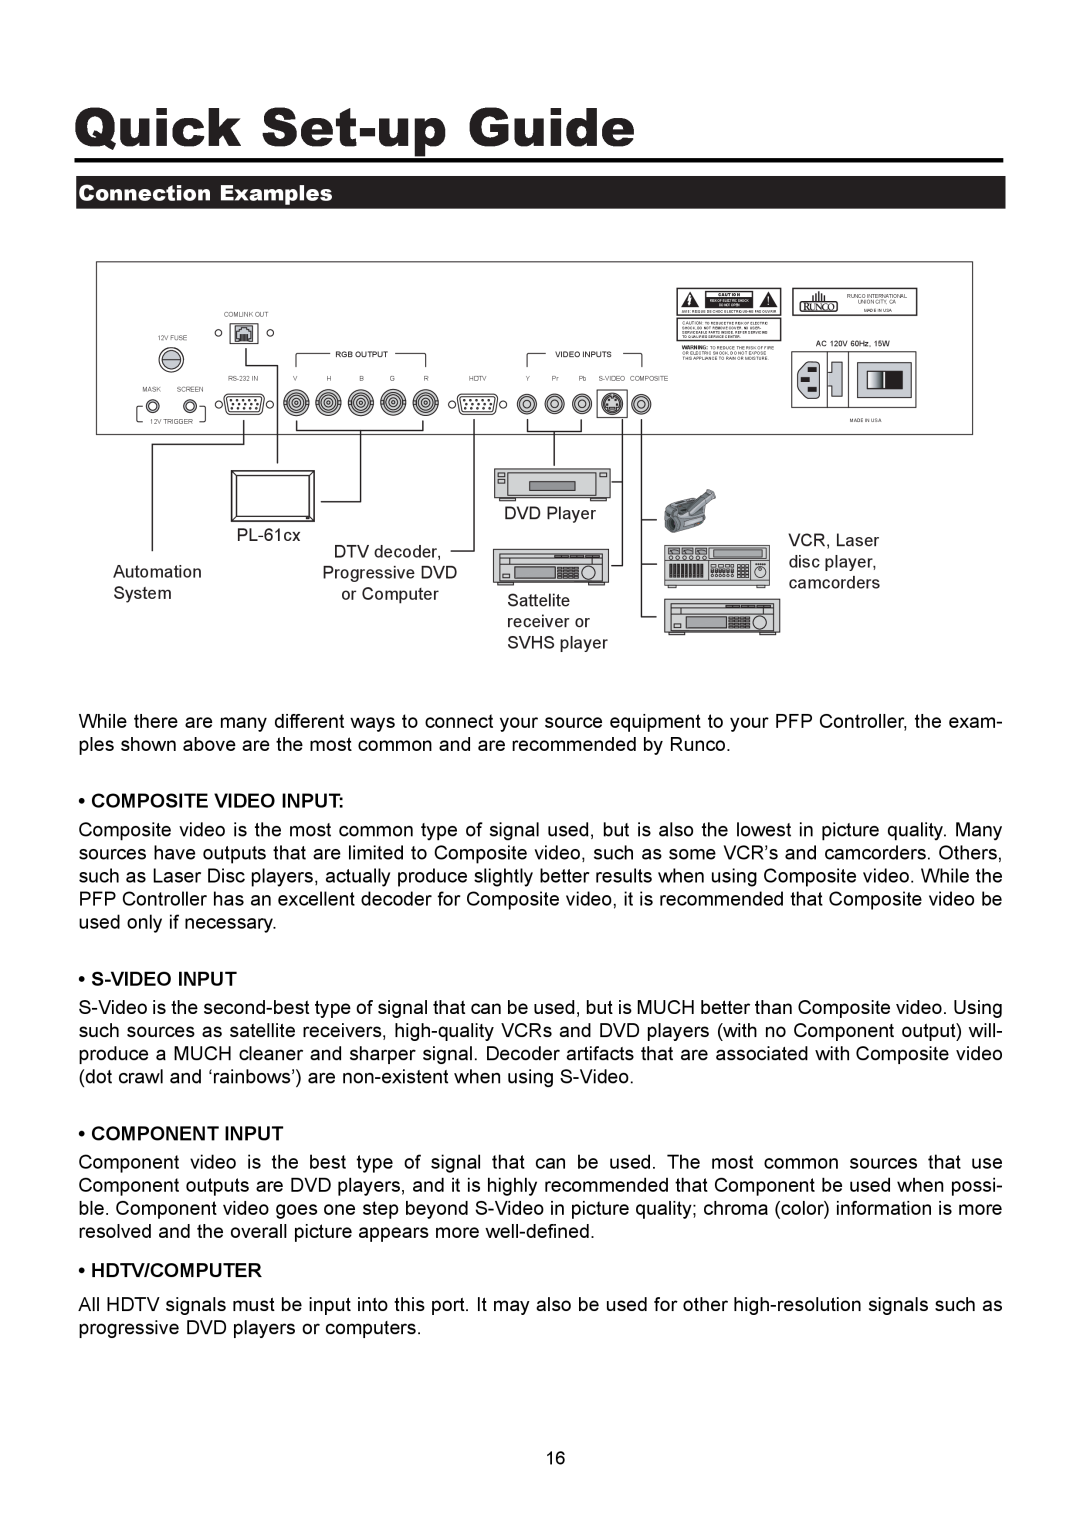 Runco PL-61CX manual Quick Set-up Guide, Connection Examples 